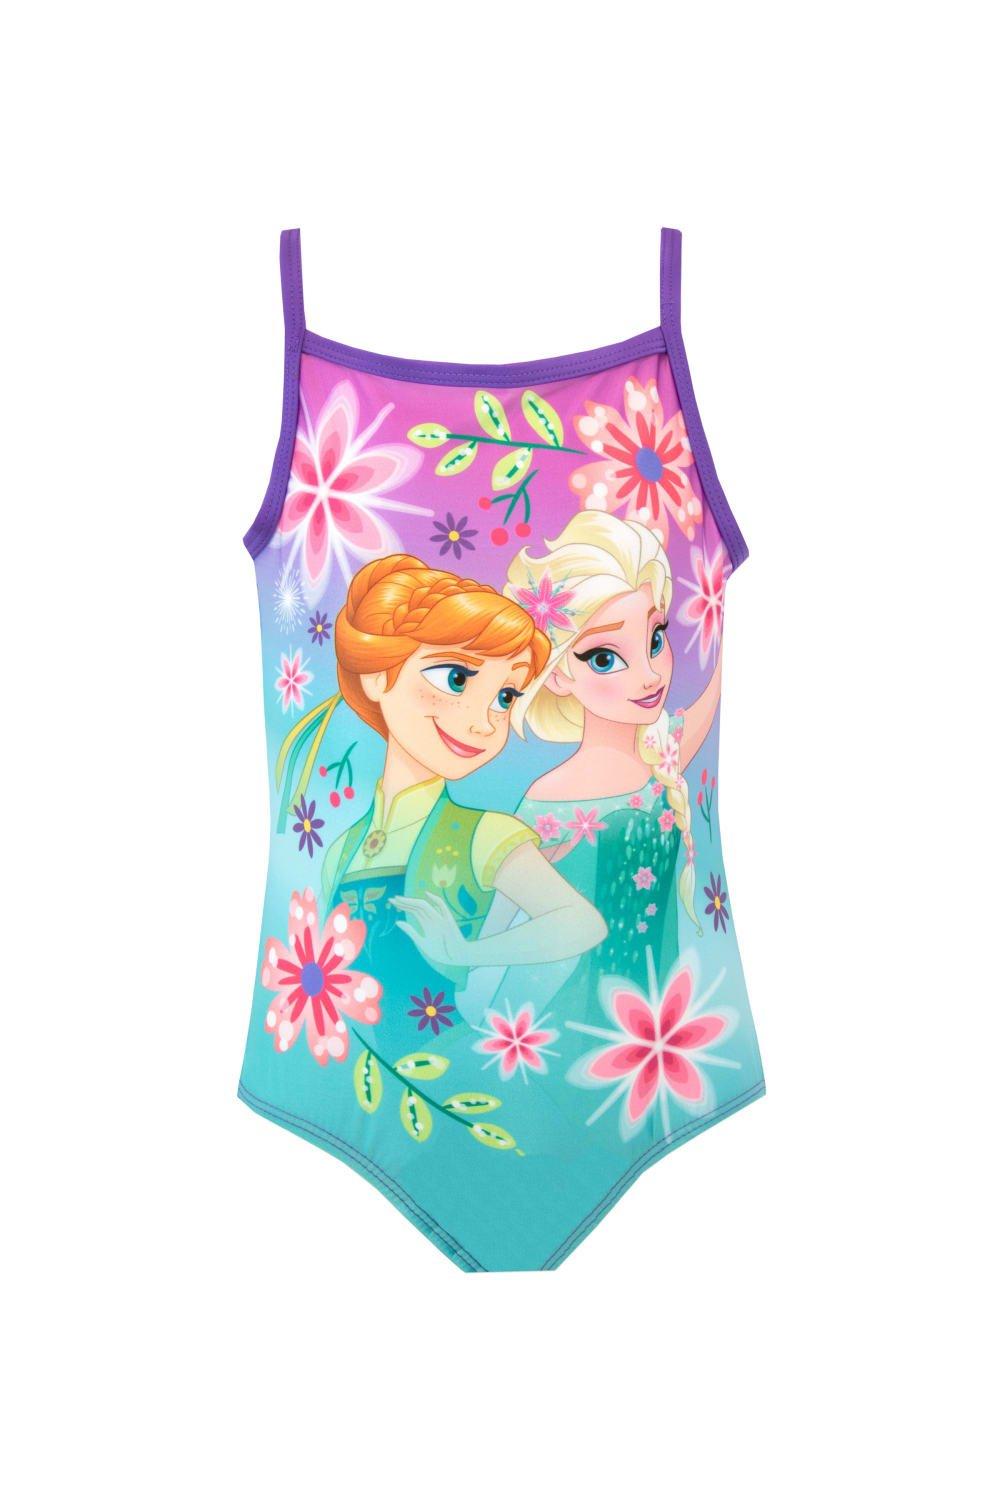 Frozen Elsa And Anna Swimsuit